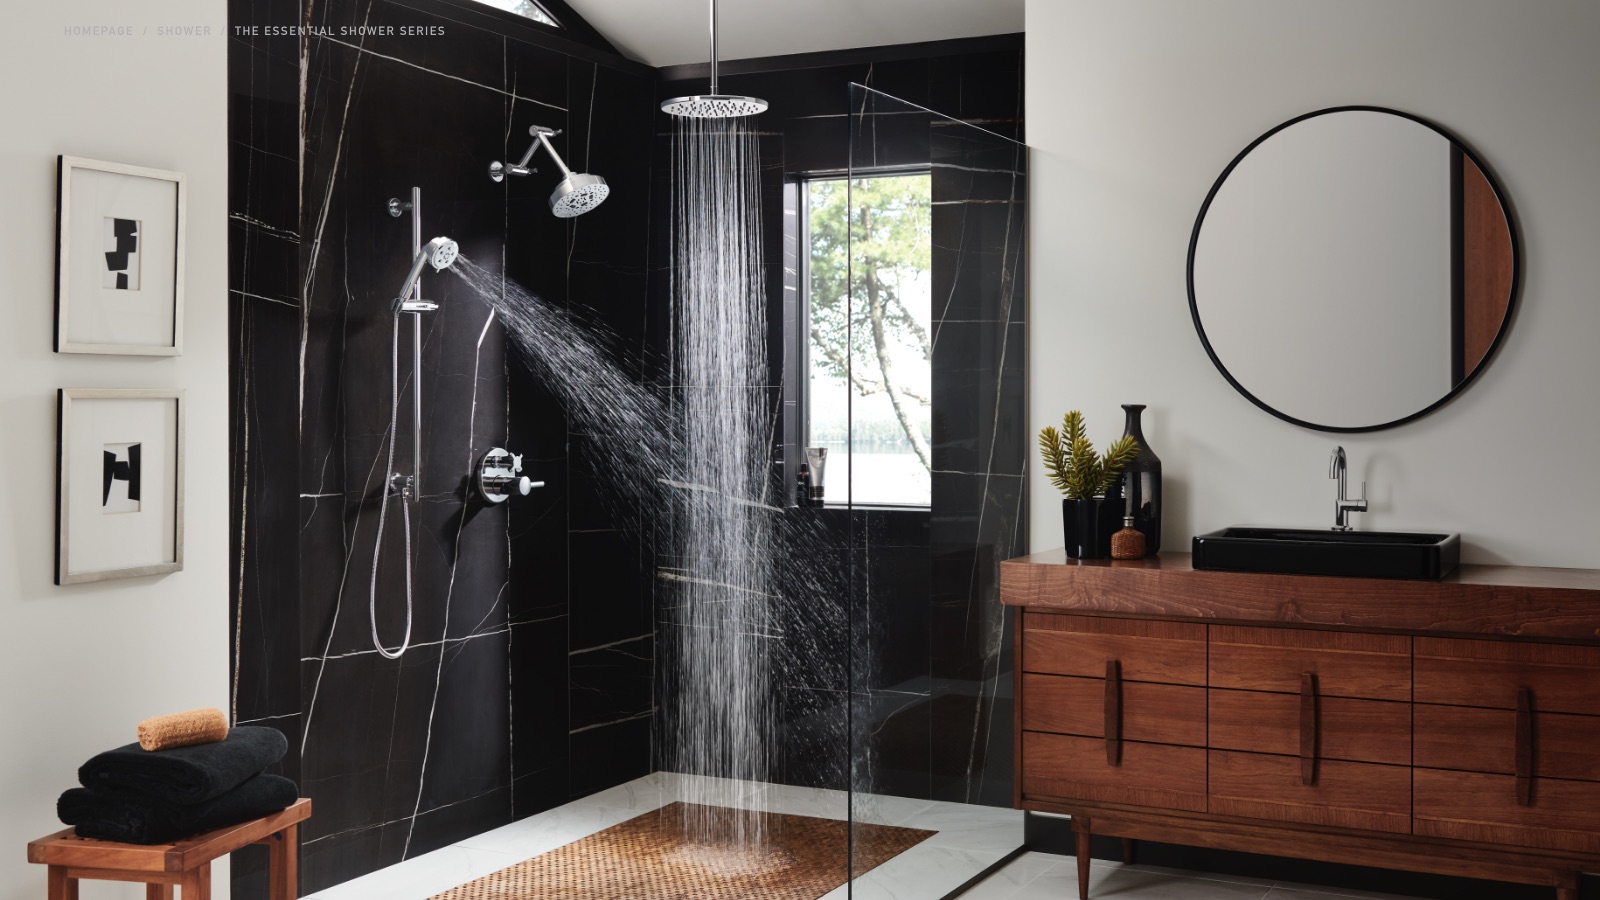 Essential™ Shower Series